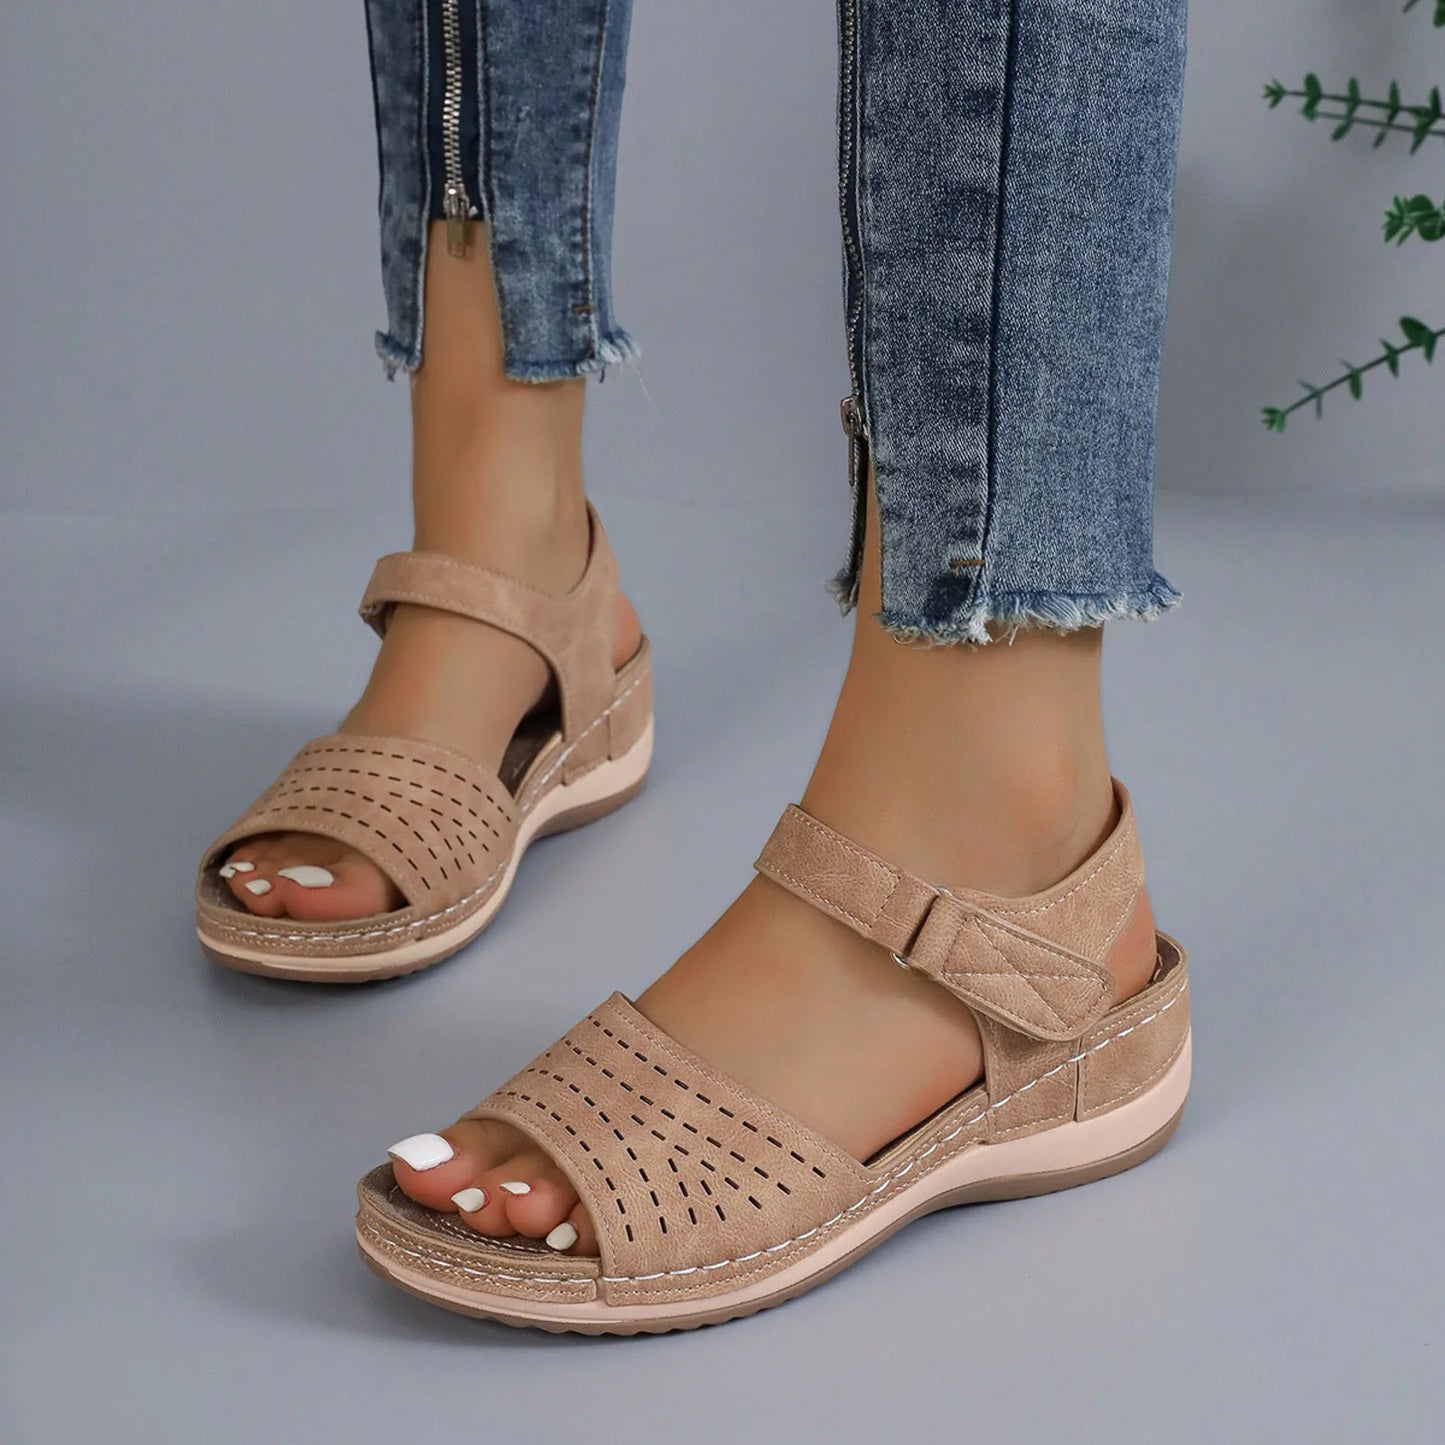 Lightweight Women's Wedges Sandals Summer Cross Strap Med Heels Sandles Woman Non-Slip Platform Gladiator Shoes Plus Size